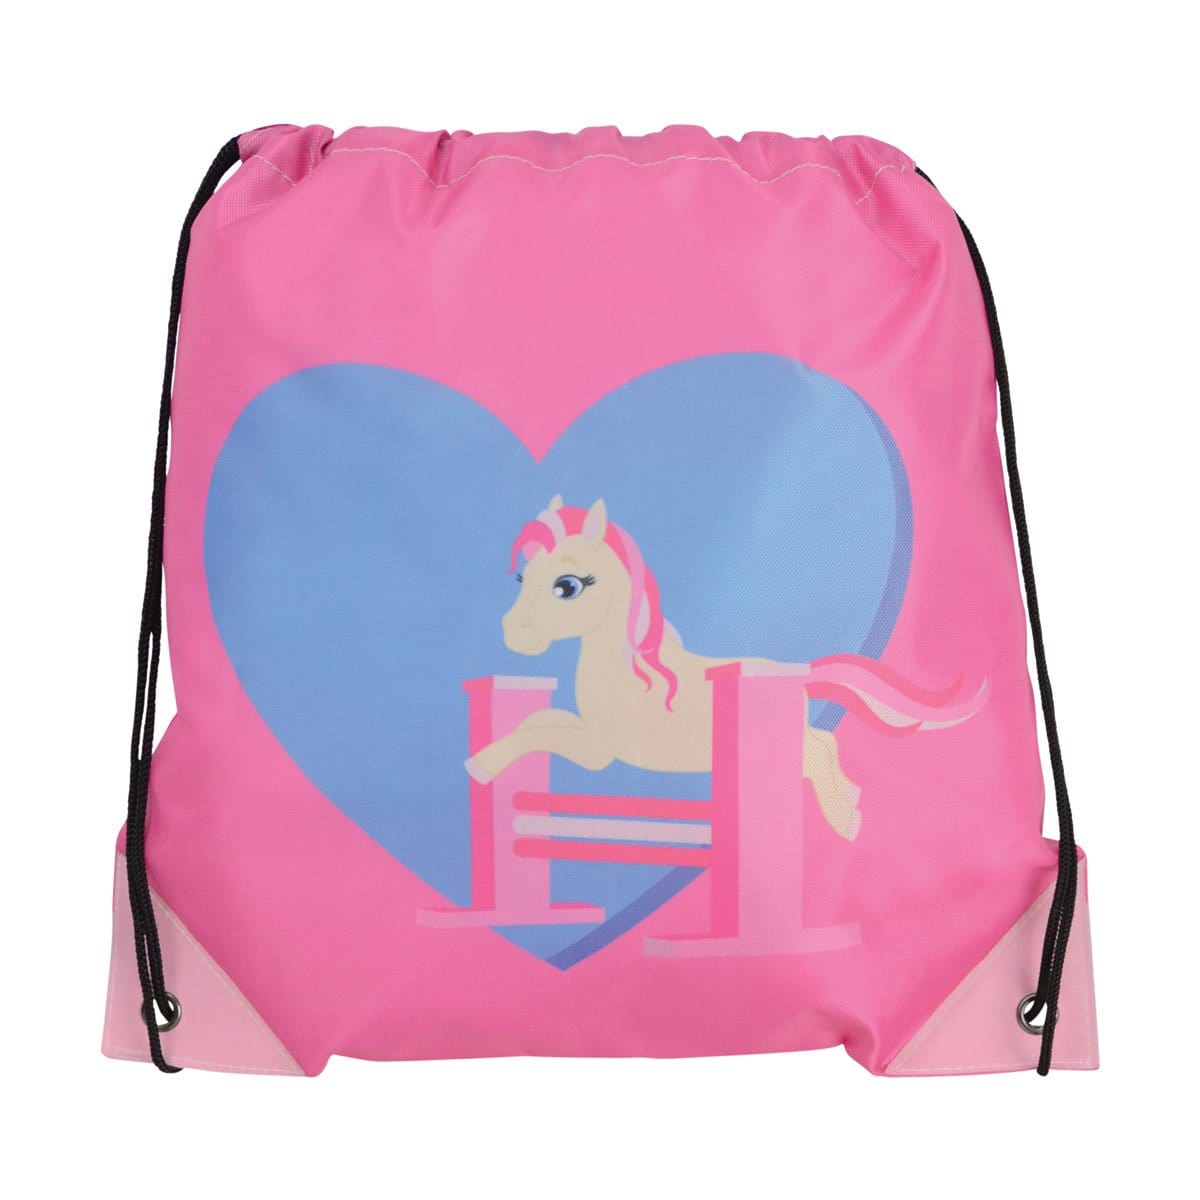 Lille Rider Little Show Pony DrawString Bag